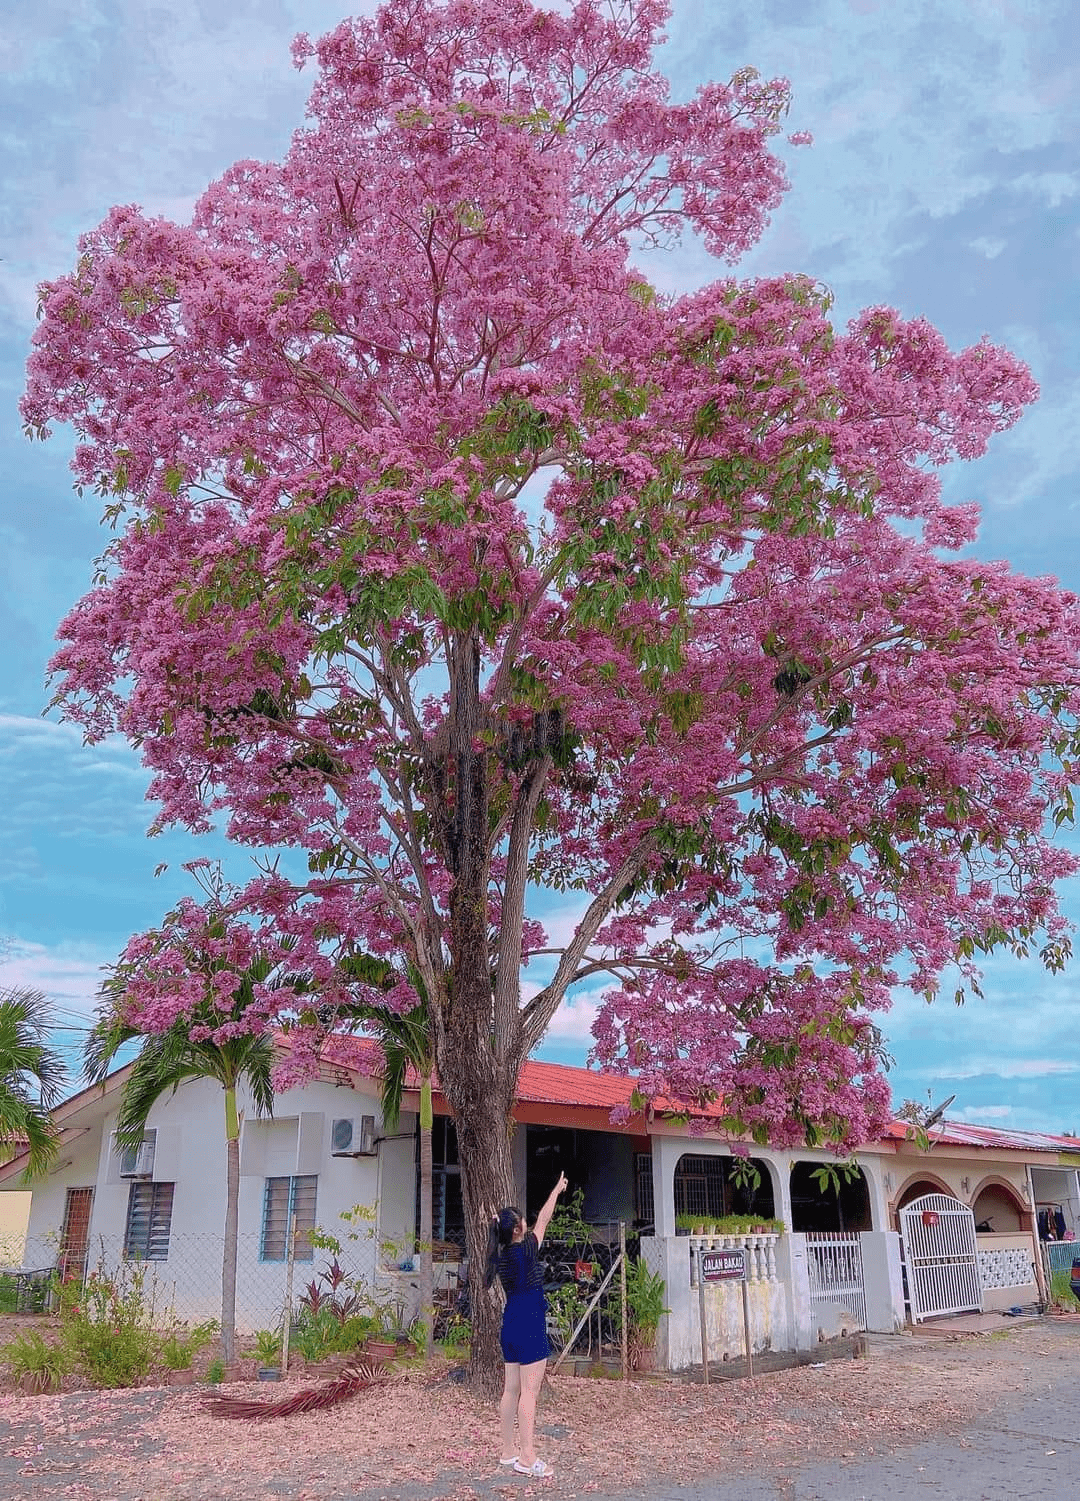 Tecome trees in full bloom in Malaysia - Perlis